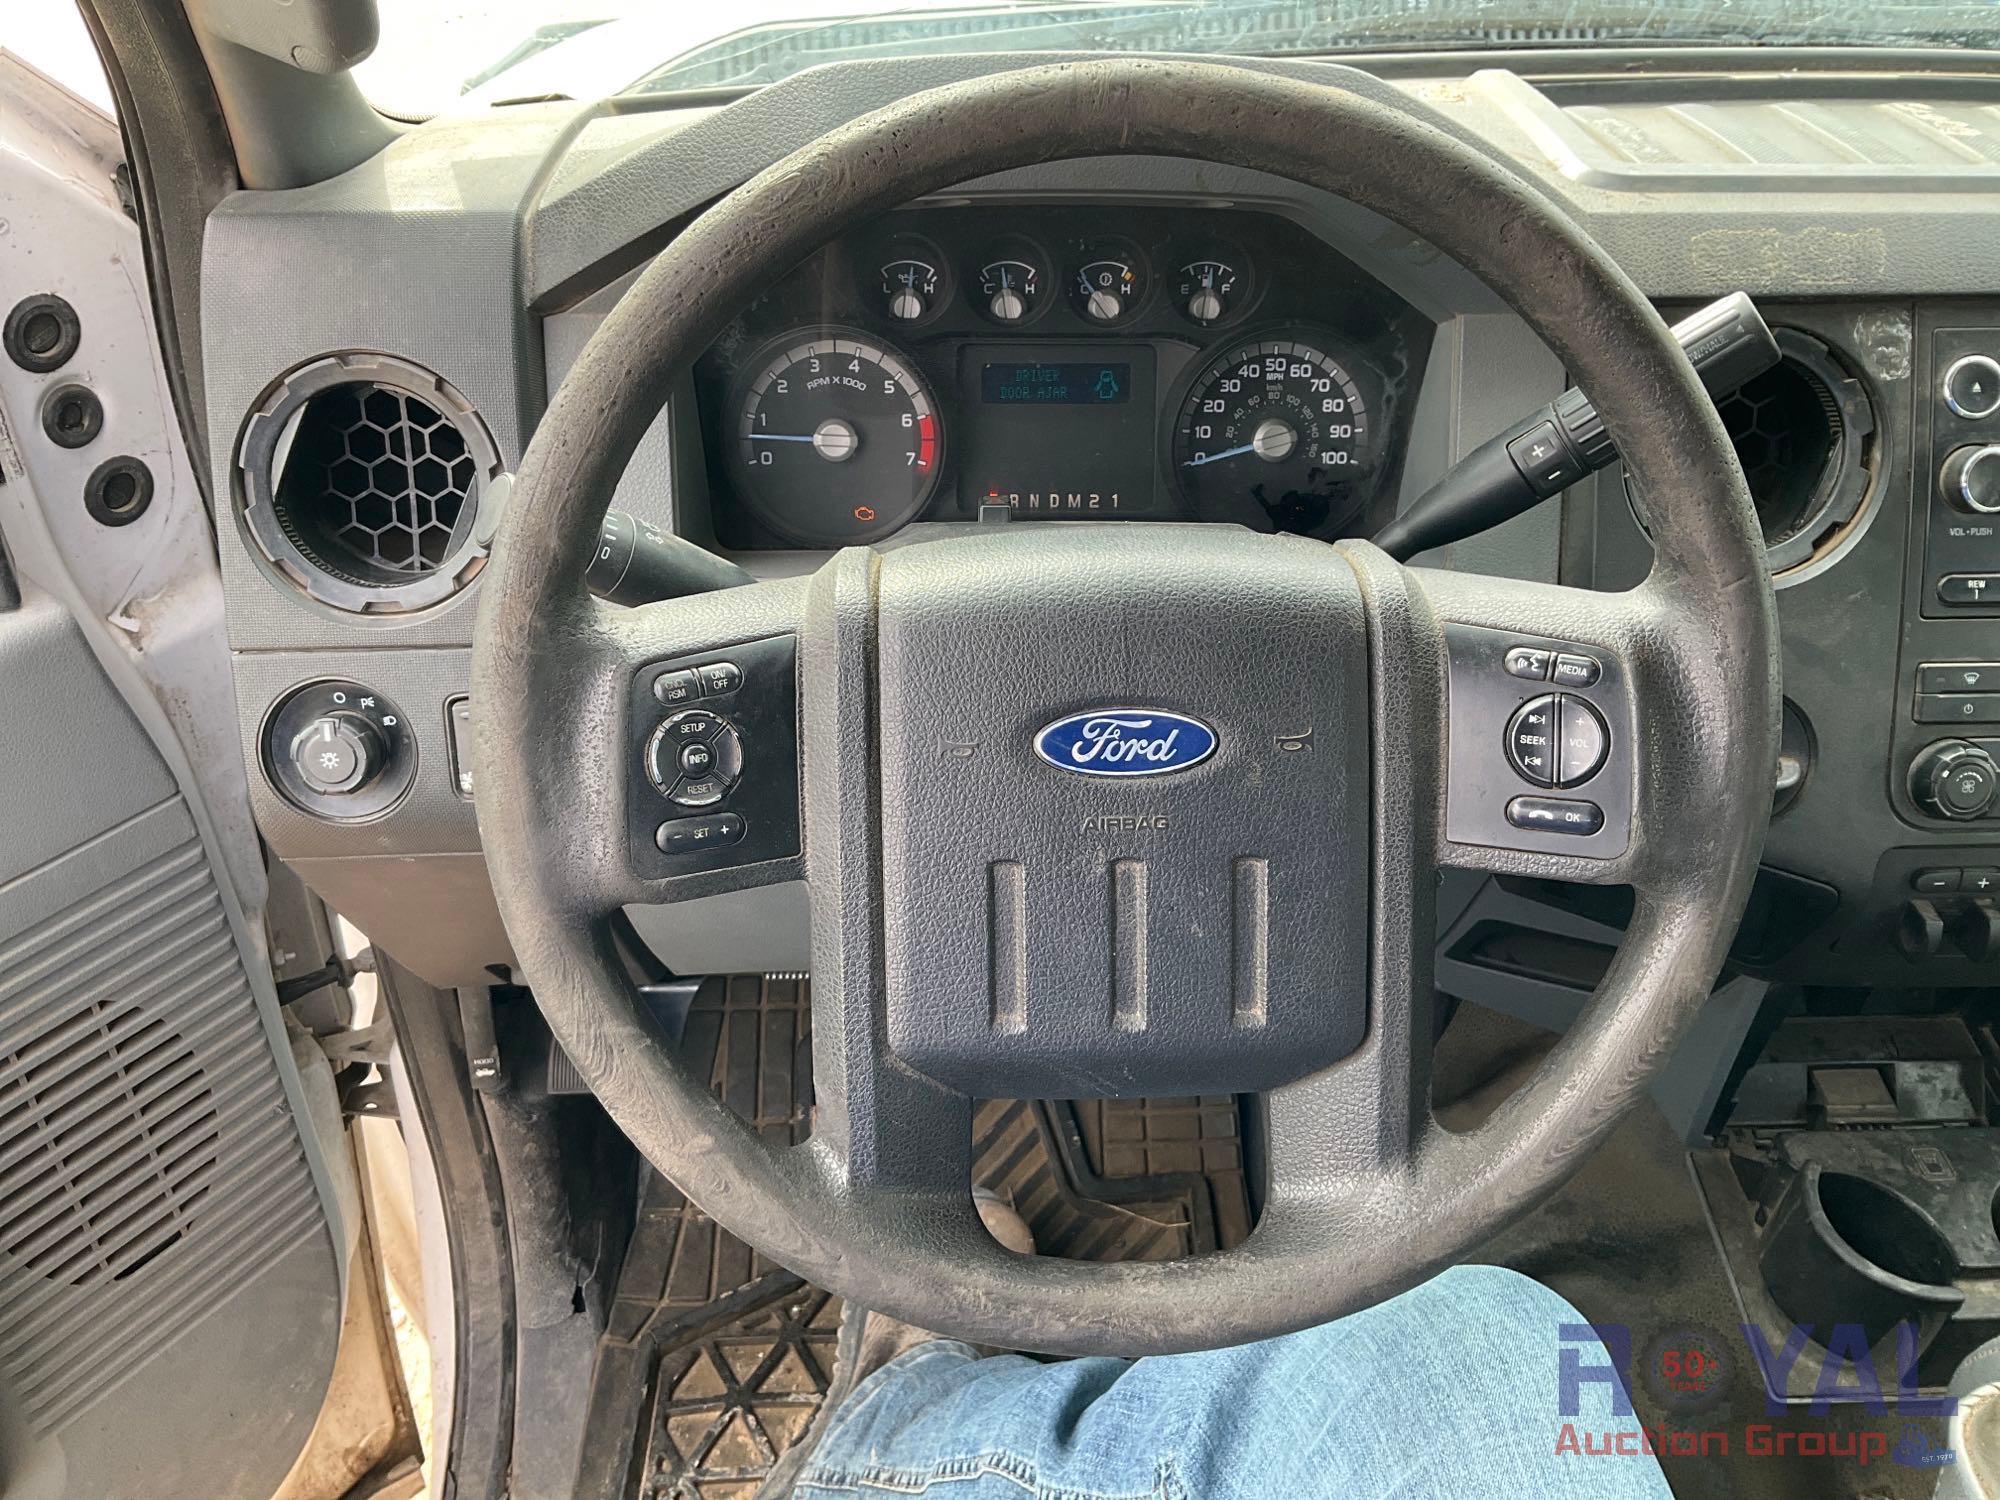 2016 Ford F250 Crew Cab Pickup Truck